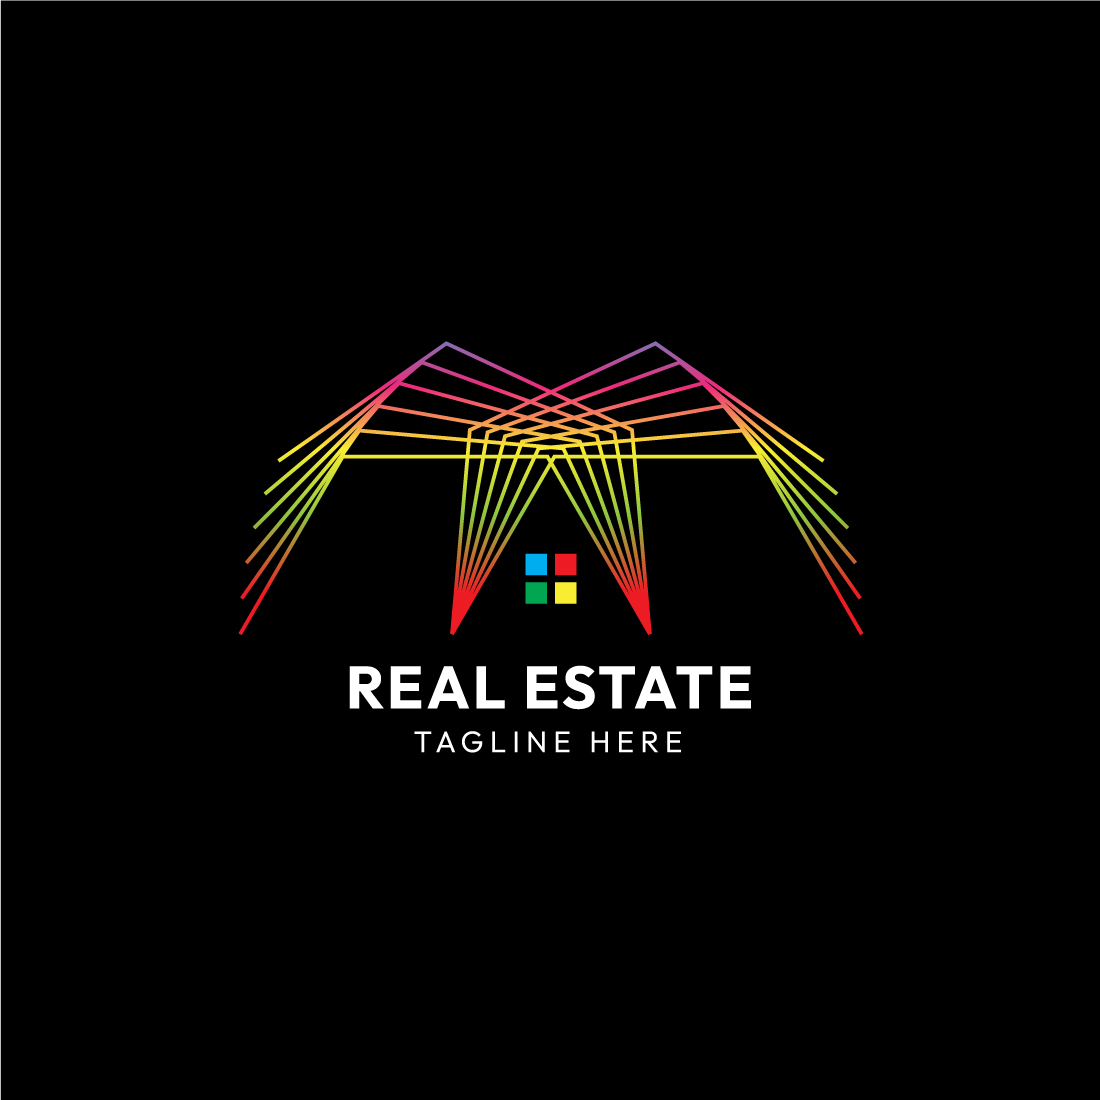 Elegant Real Estate Line Art Logo Design: Boost Your Brand with Timeless Sophistication cover image.